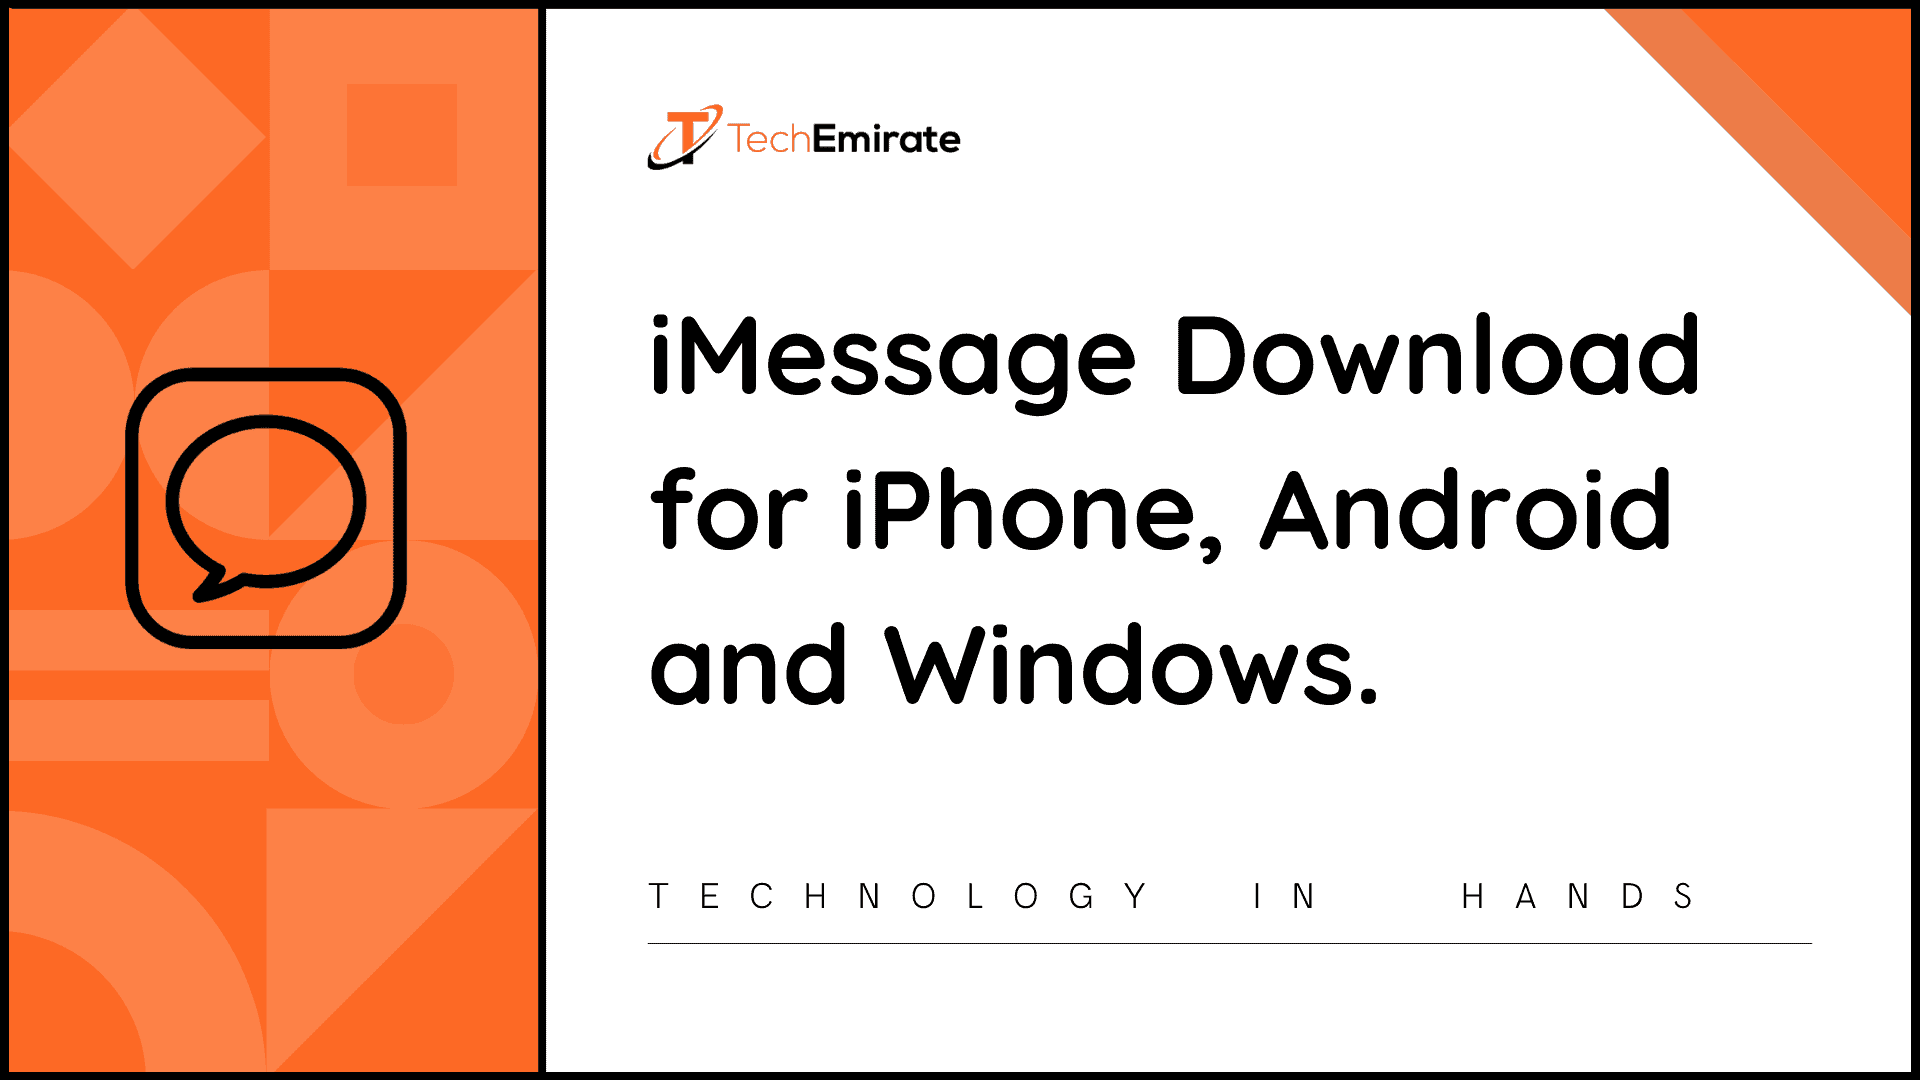 Techemirate - iMessage Download